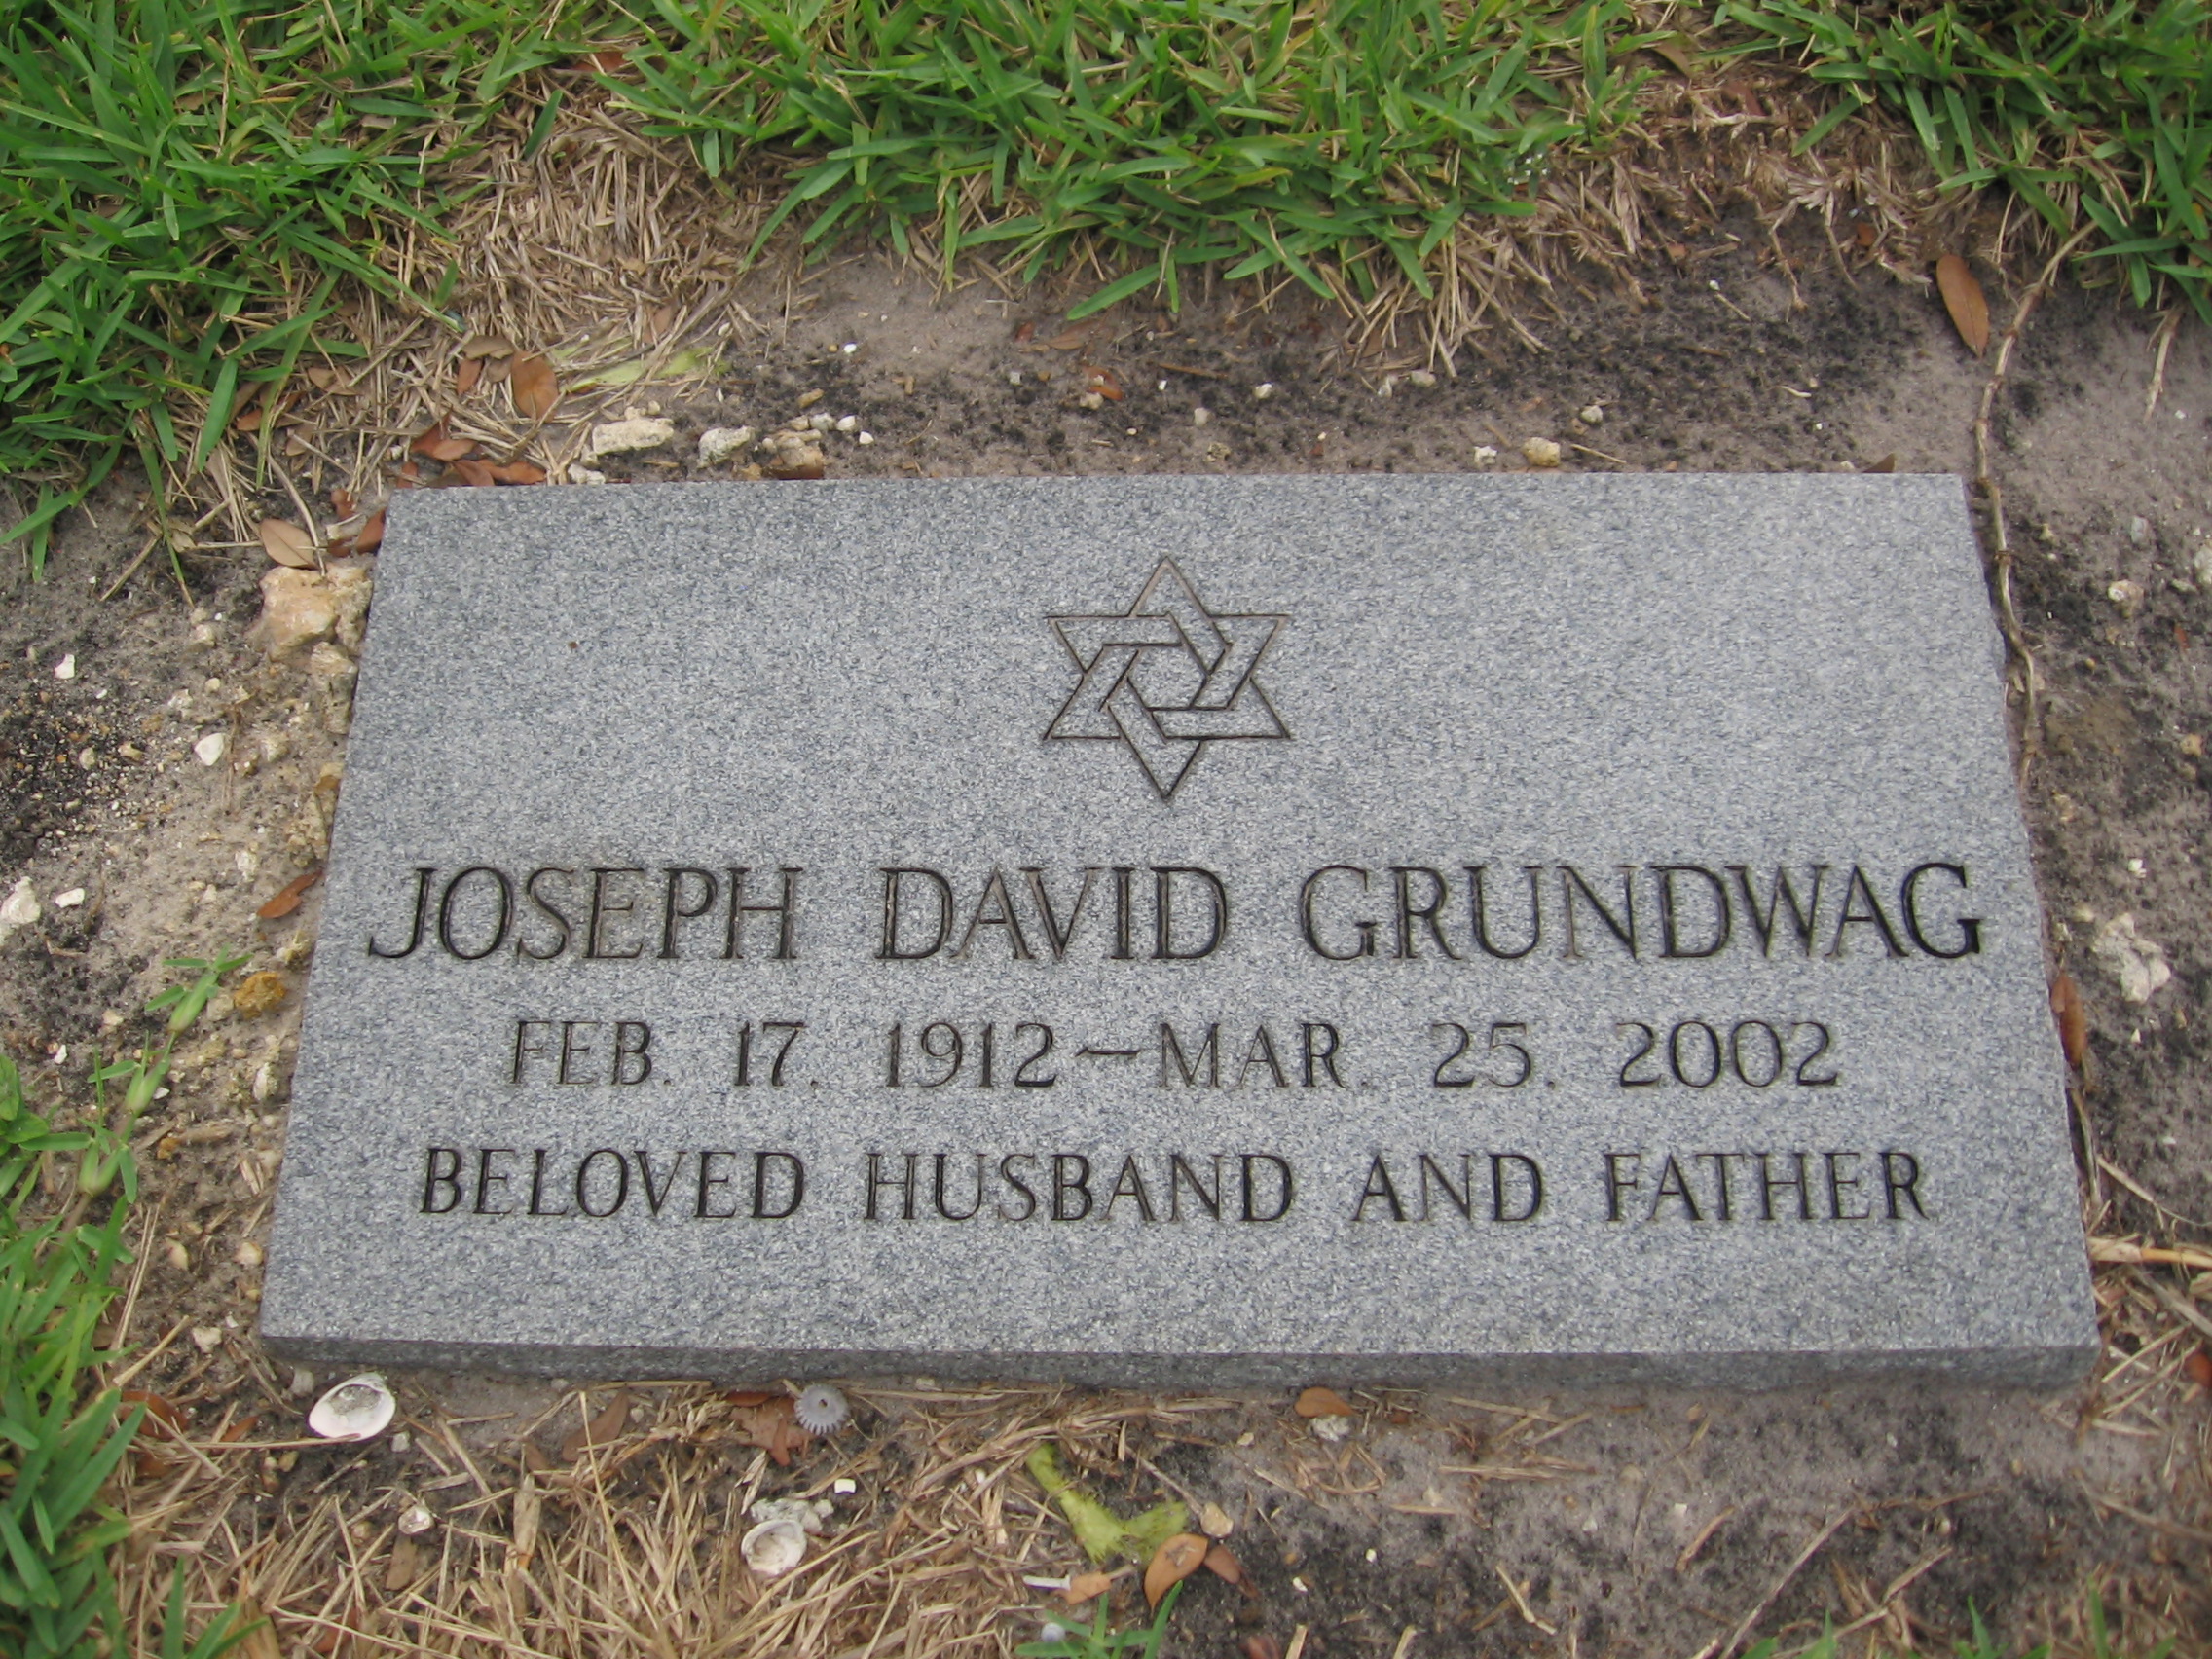 Joseph David Grundwag